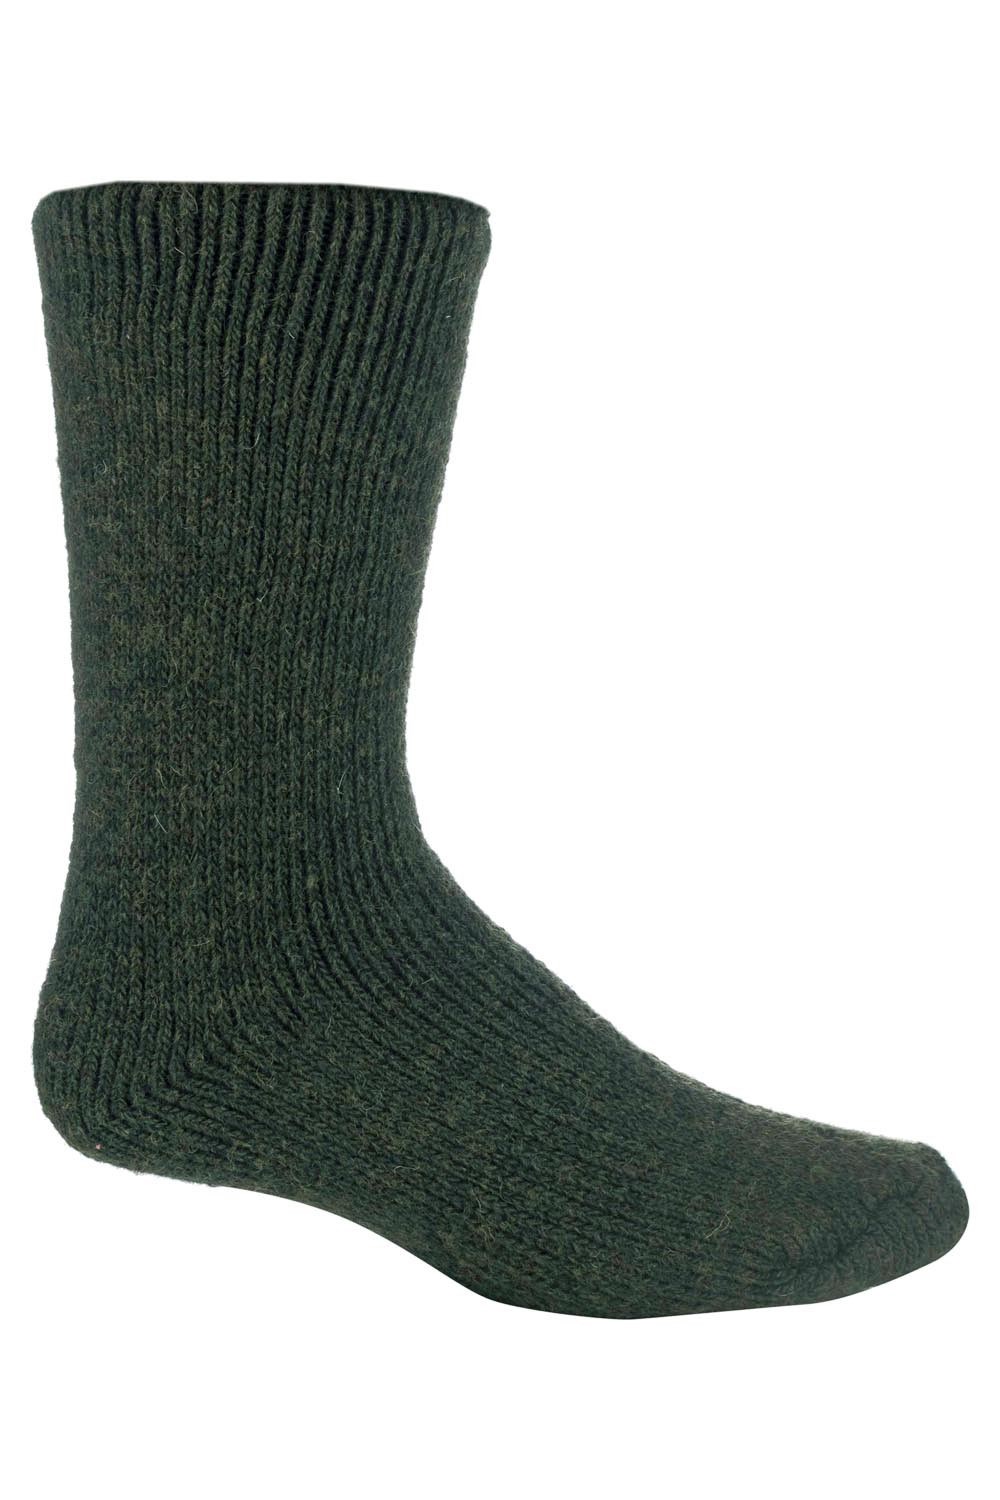 Mens Thick Thermal Wool Socks -